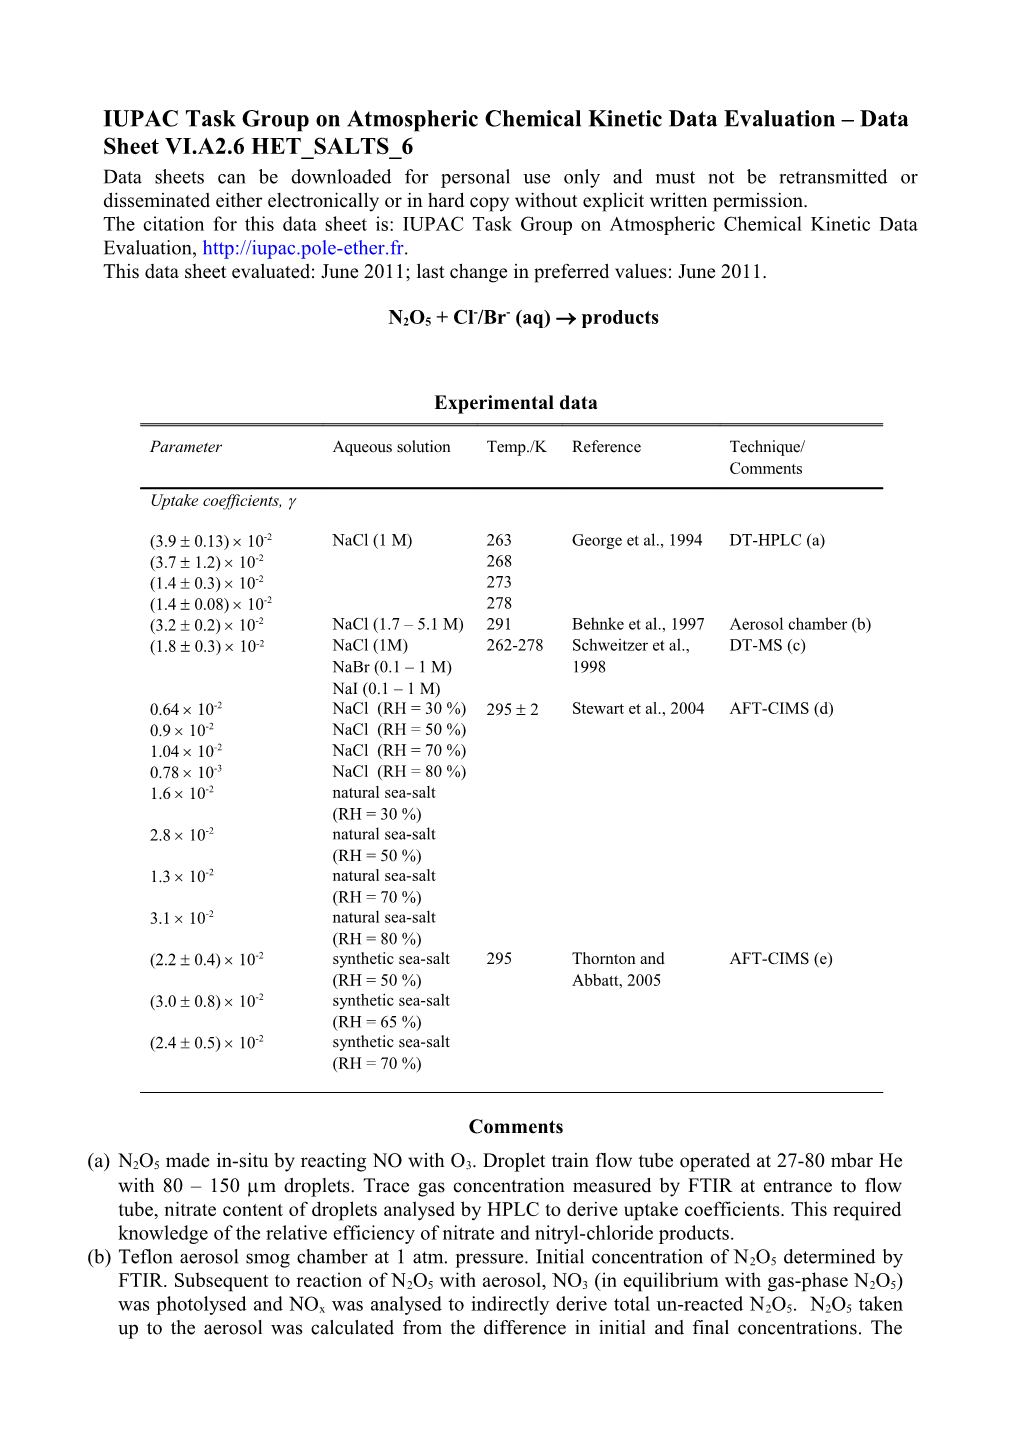 IUPAC Task Group on Atmospheric Chemical Kinetic Data Evaluation Data Sheet VI.A2.6 HET SALTS 6